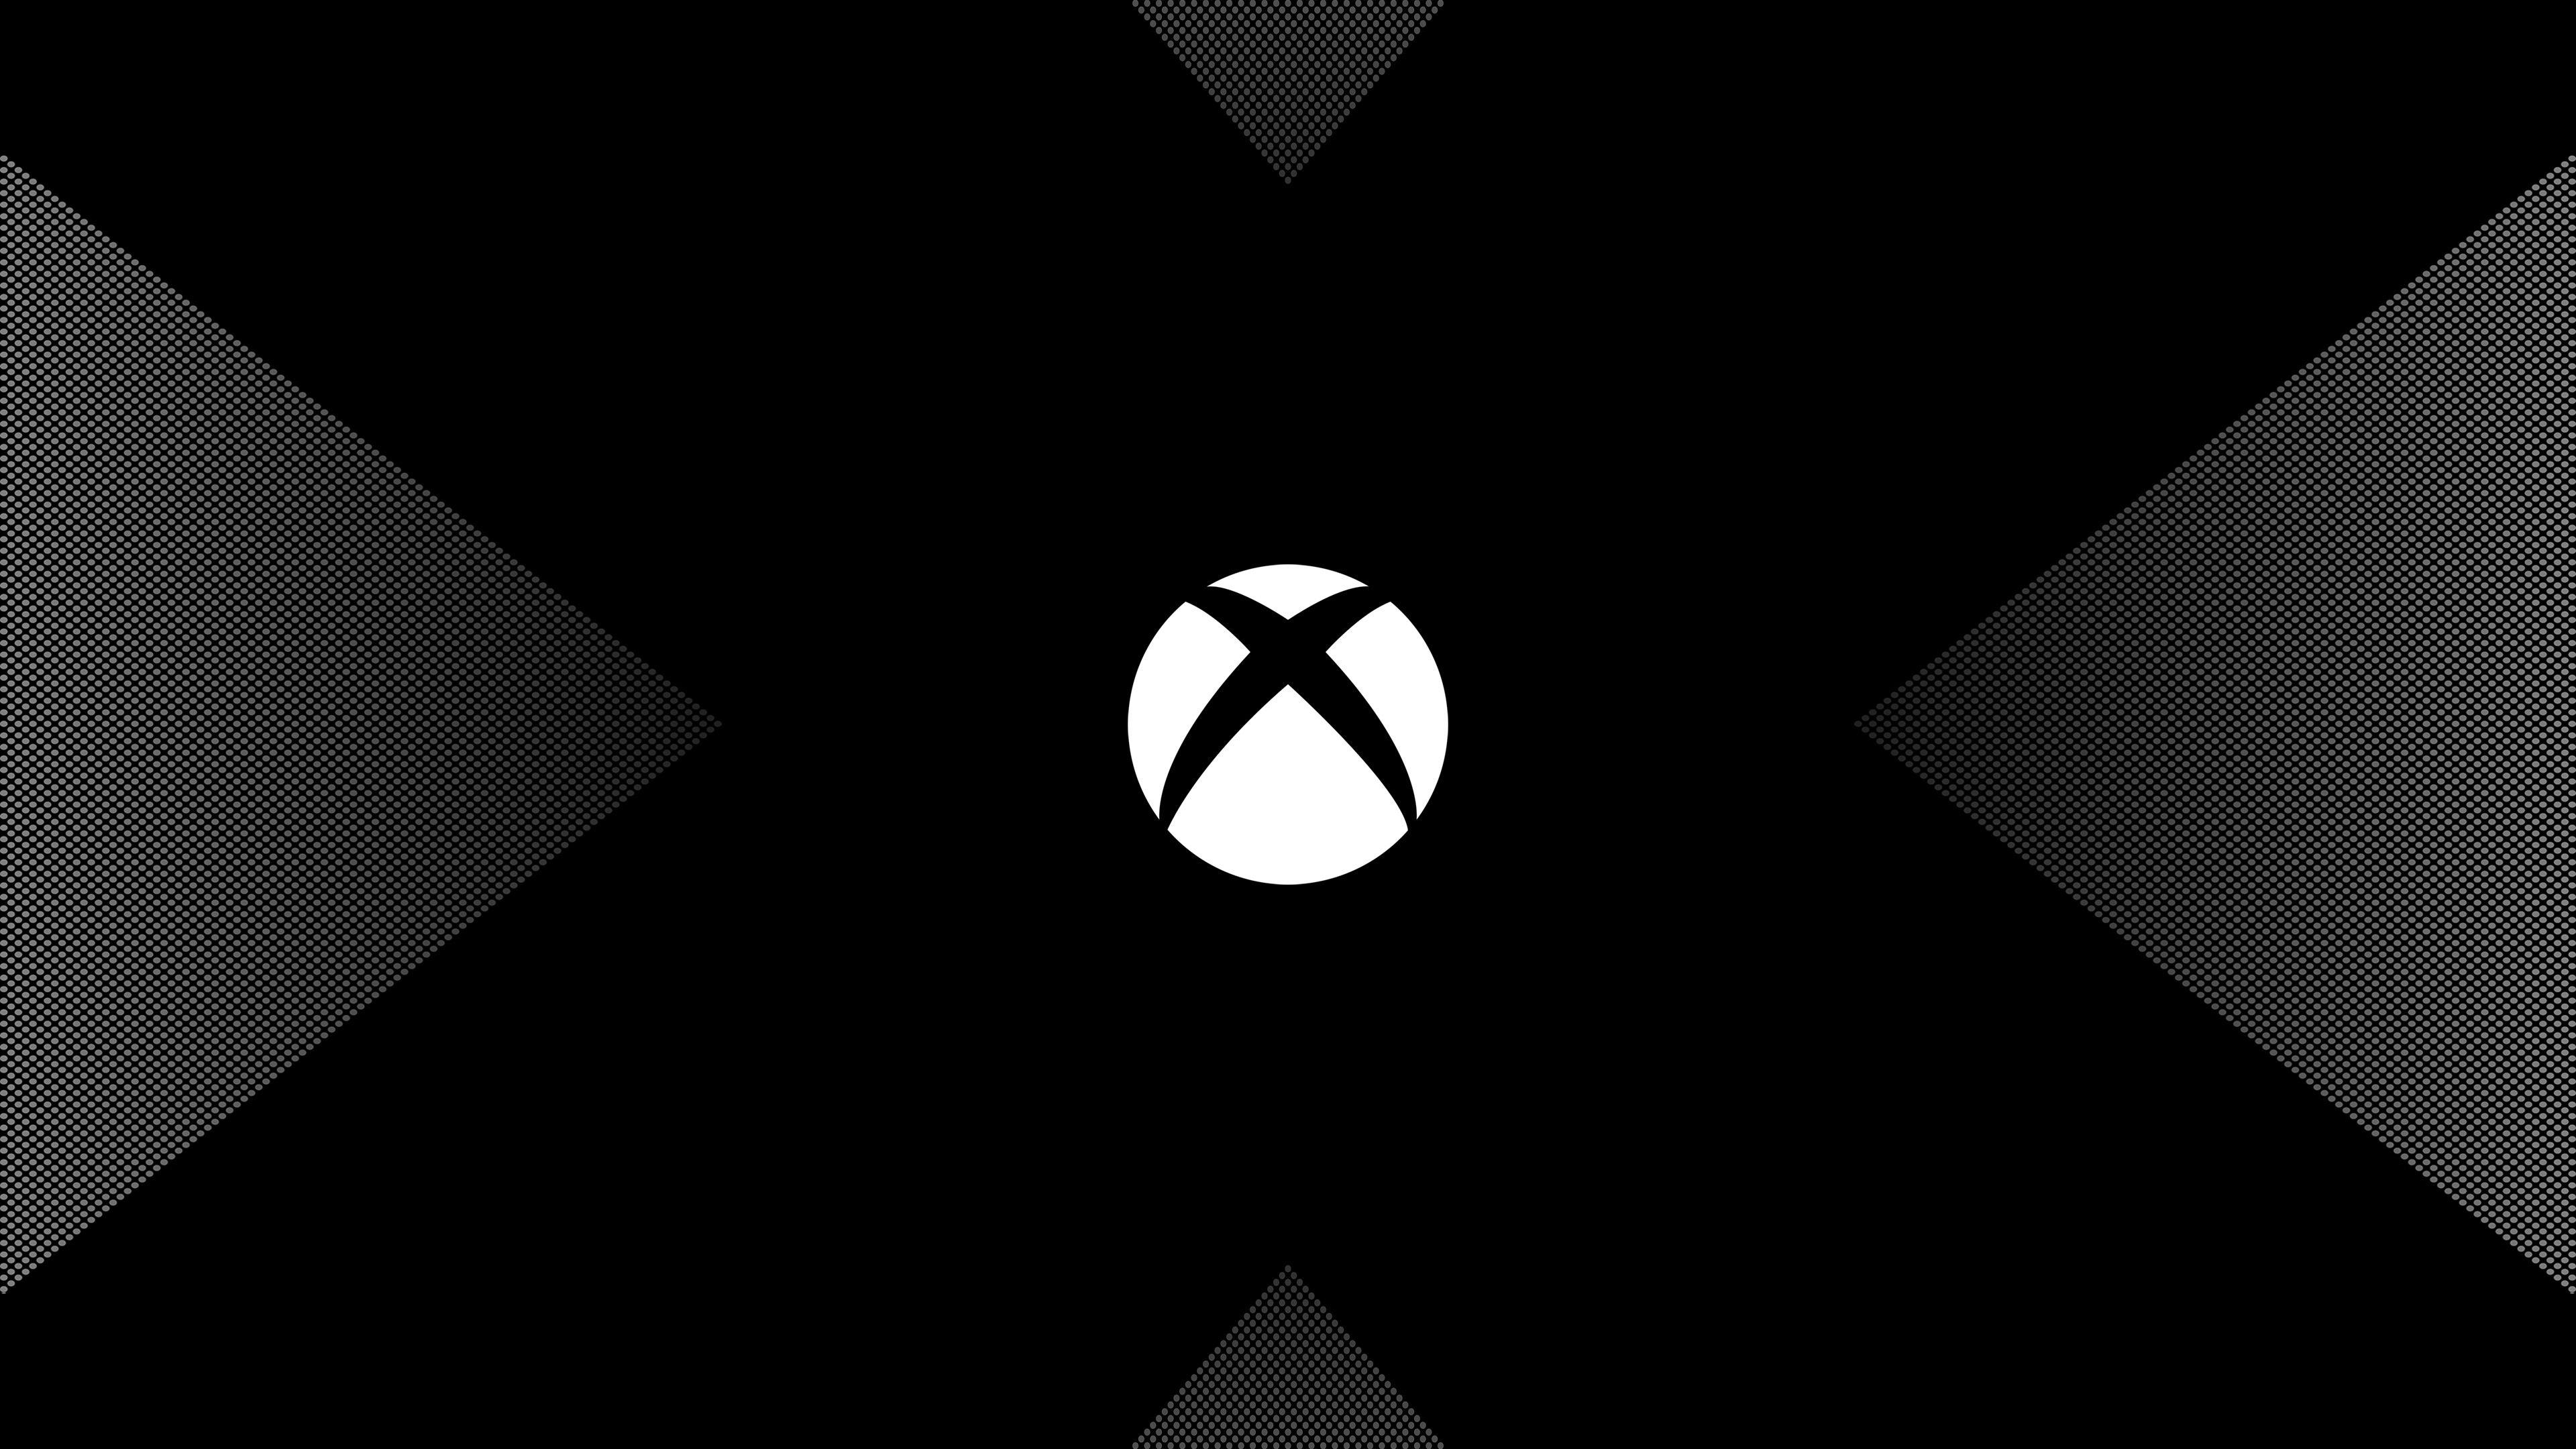 Xbox One X logo 4K Wallpapers